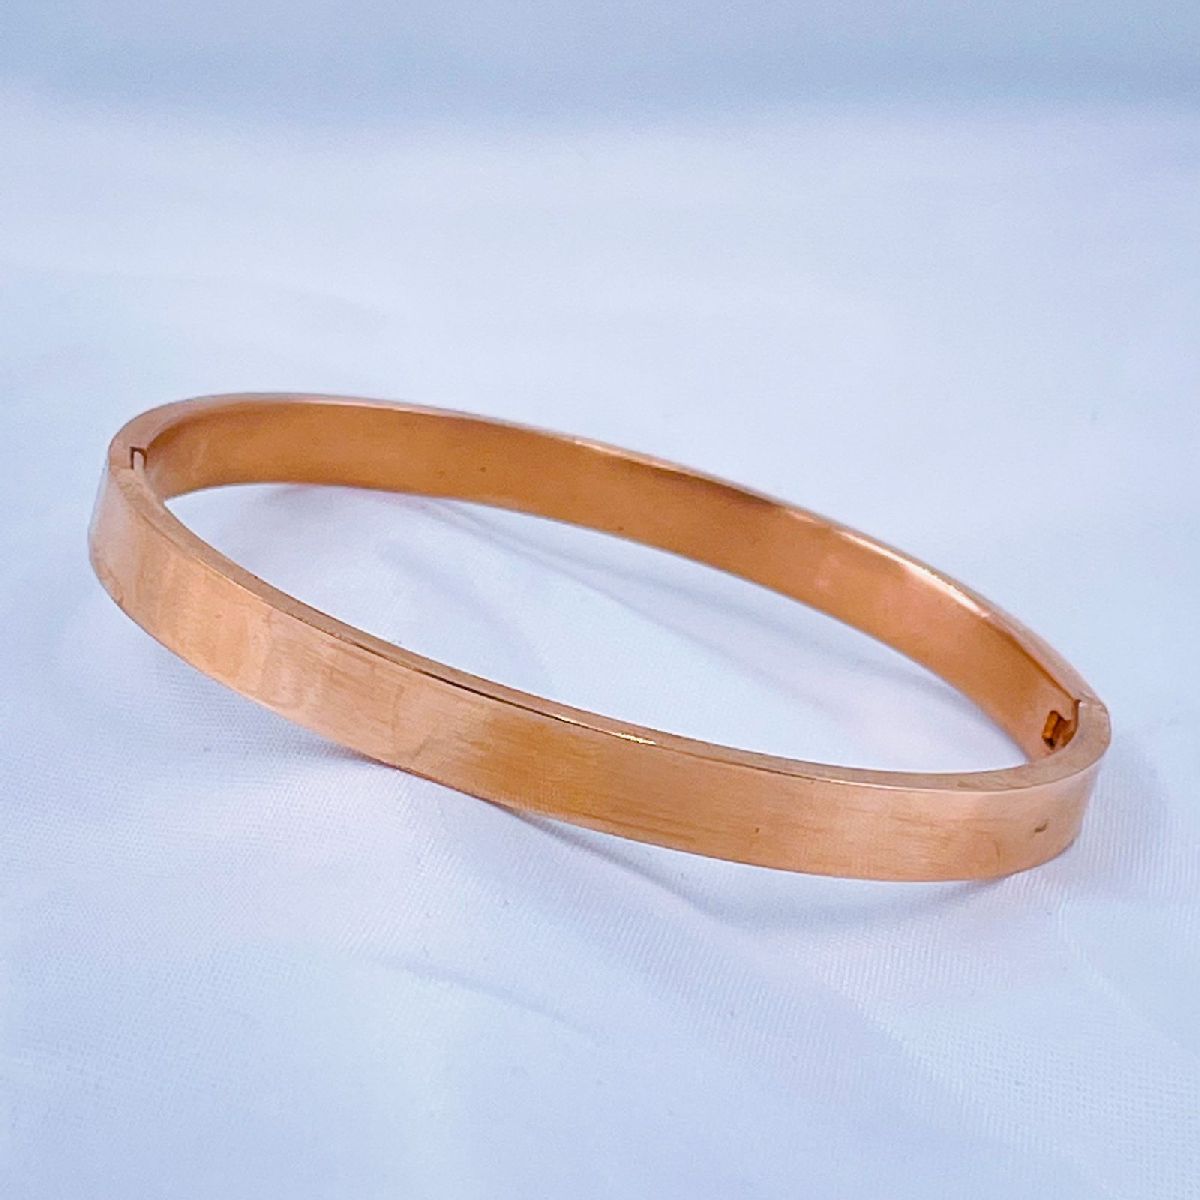 Nina Ricci Gold Plated Bracelet - 7 1/4